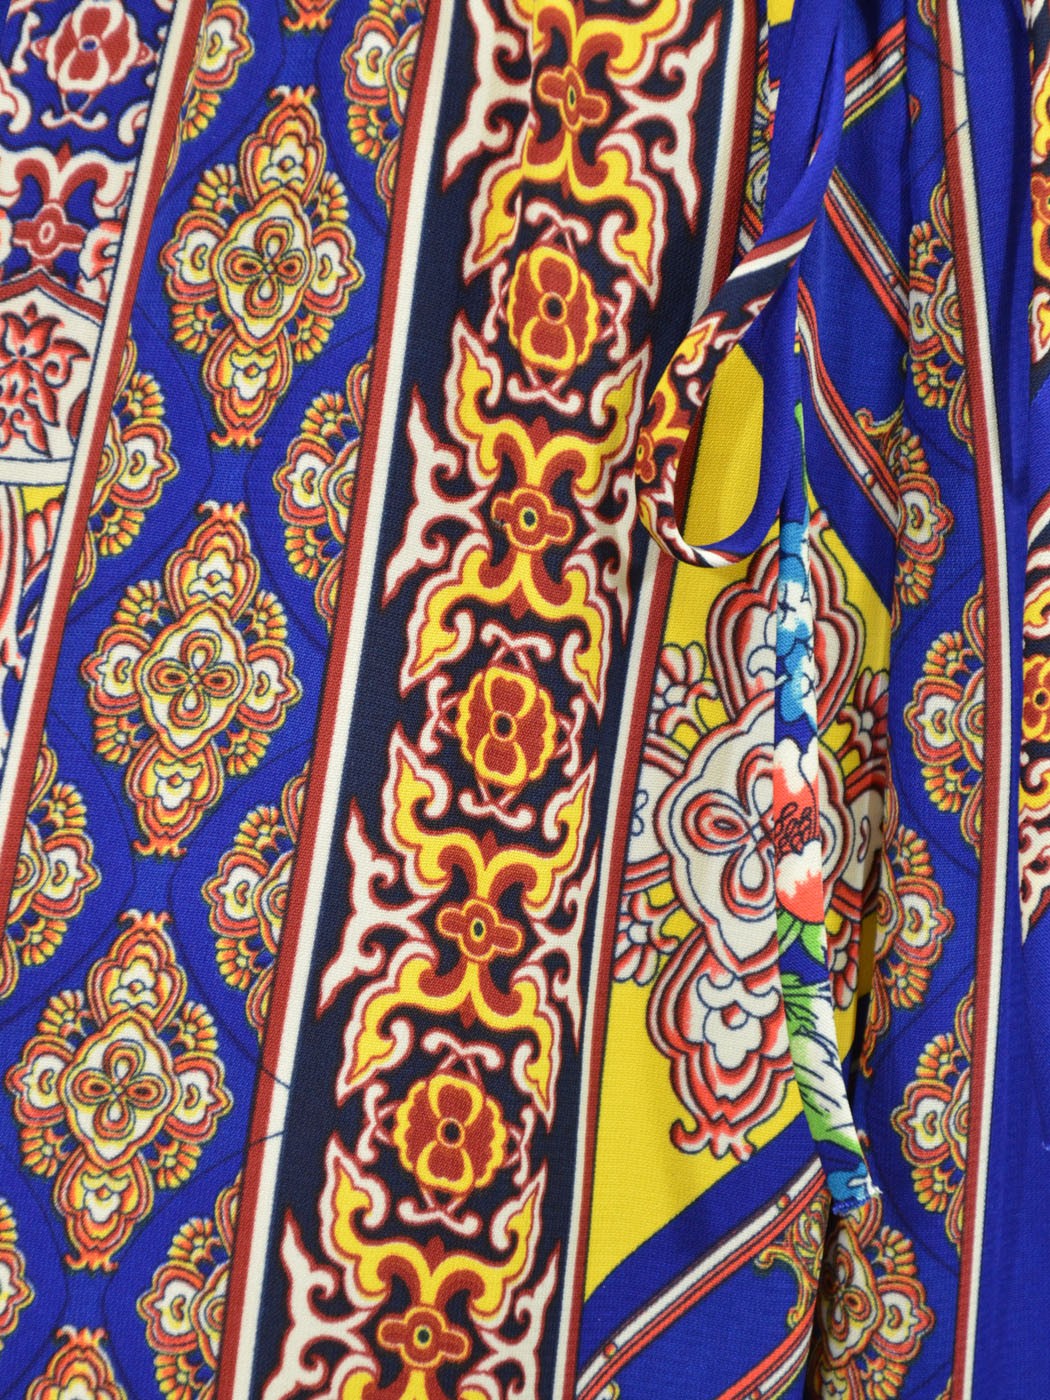 Anna-Kaci Royal Tapered Harem Genie Arabian Inspired Printed Fashion Pants - ALILANG.COM